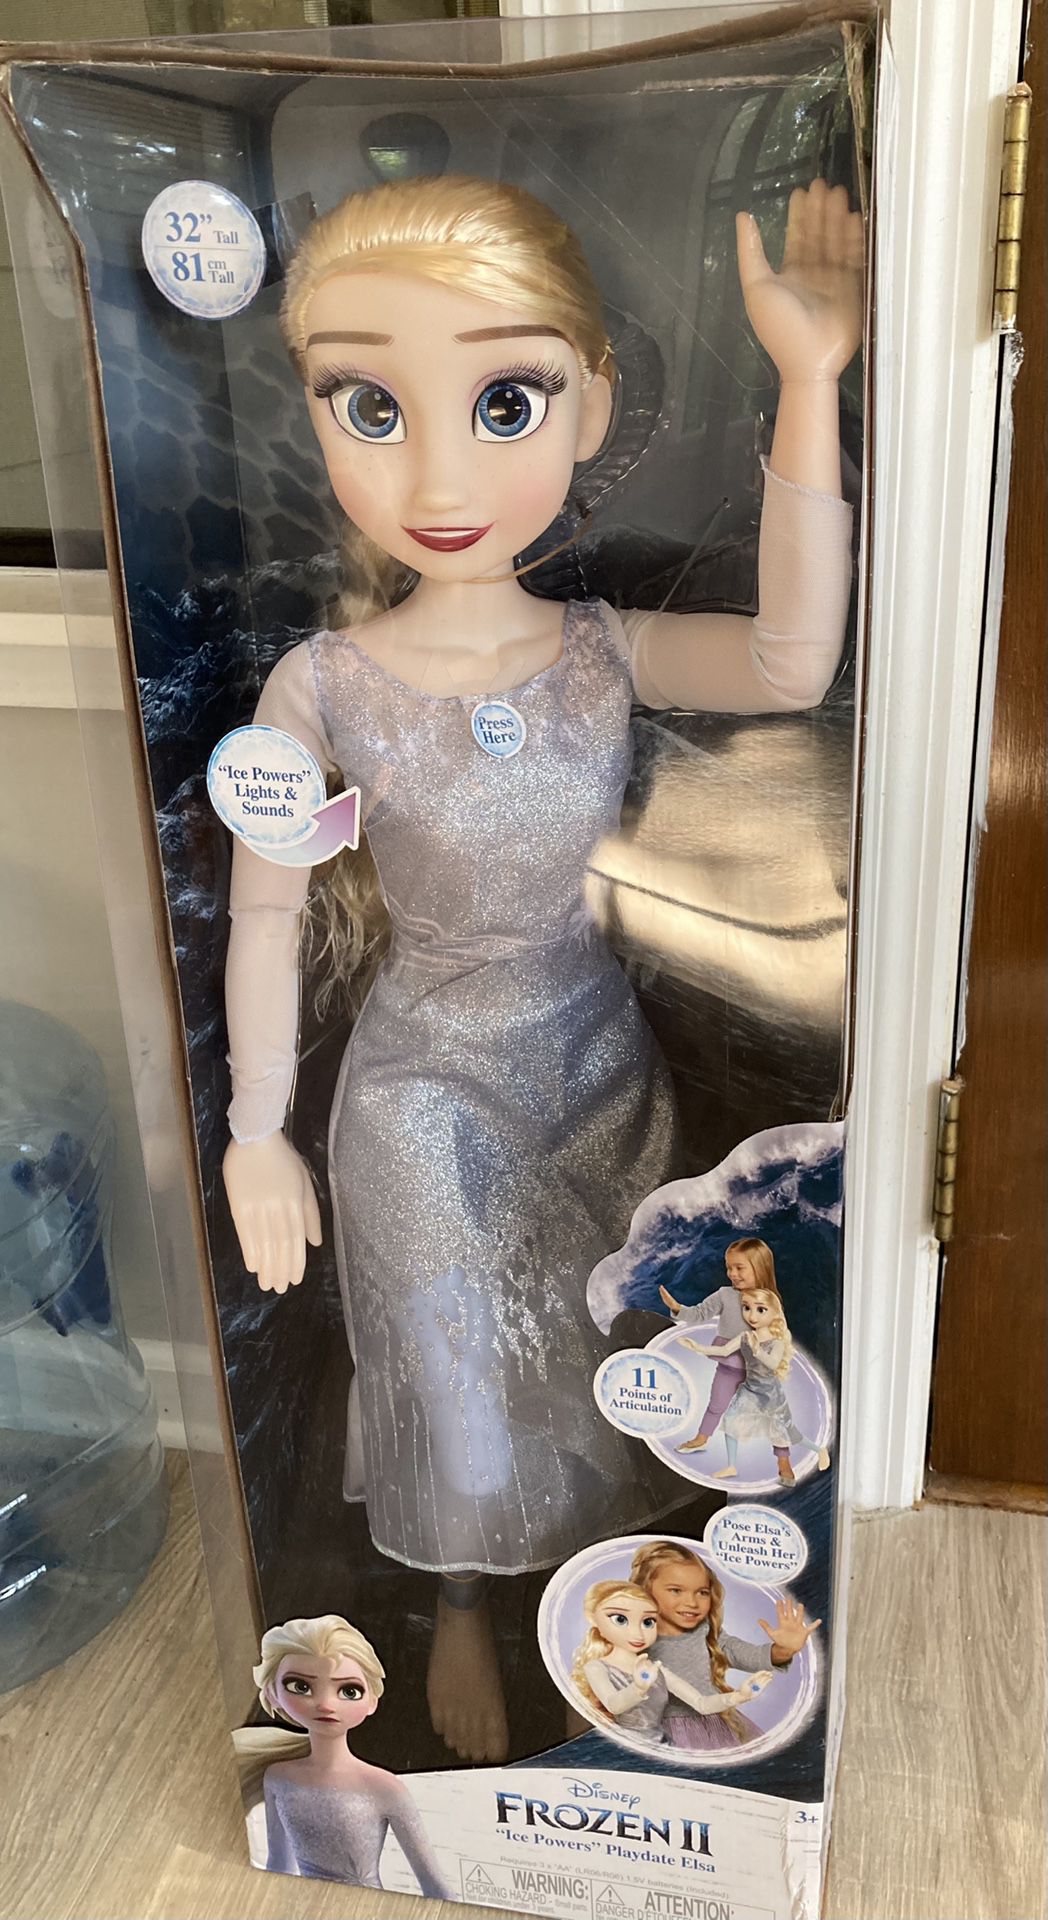 Disney Frozen 2 Ice Powers Playdate Elsa 